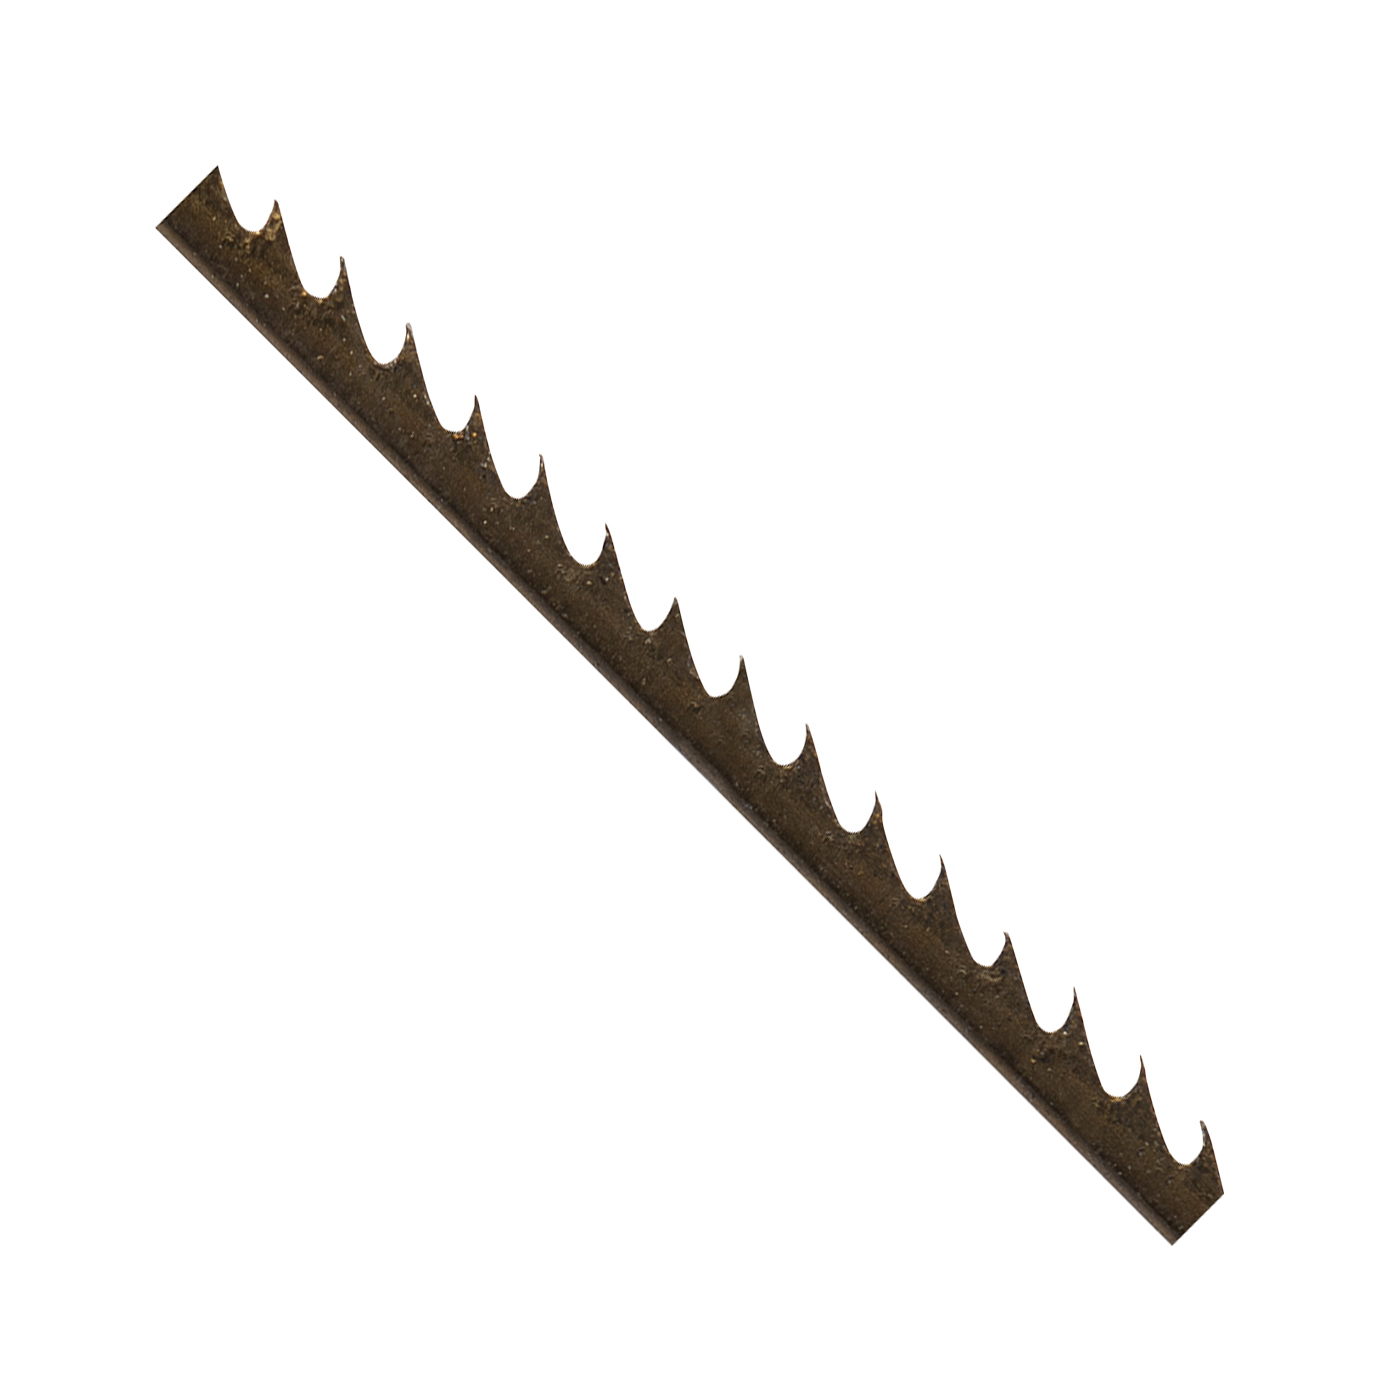 Antilope Metal Fretsaw Blades, 3 - 144 pieces